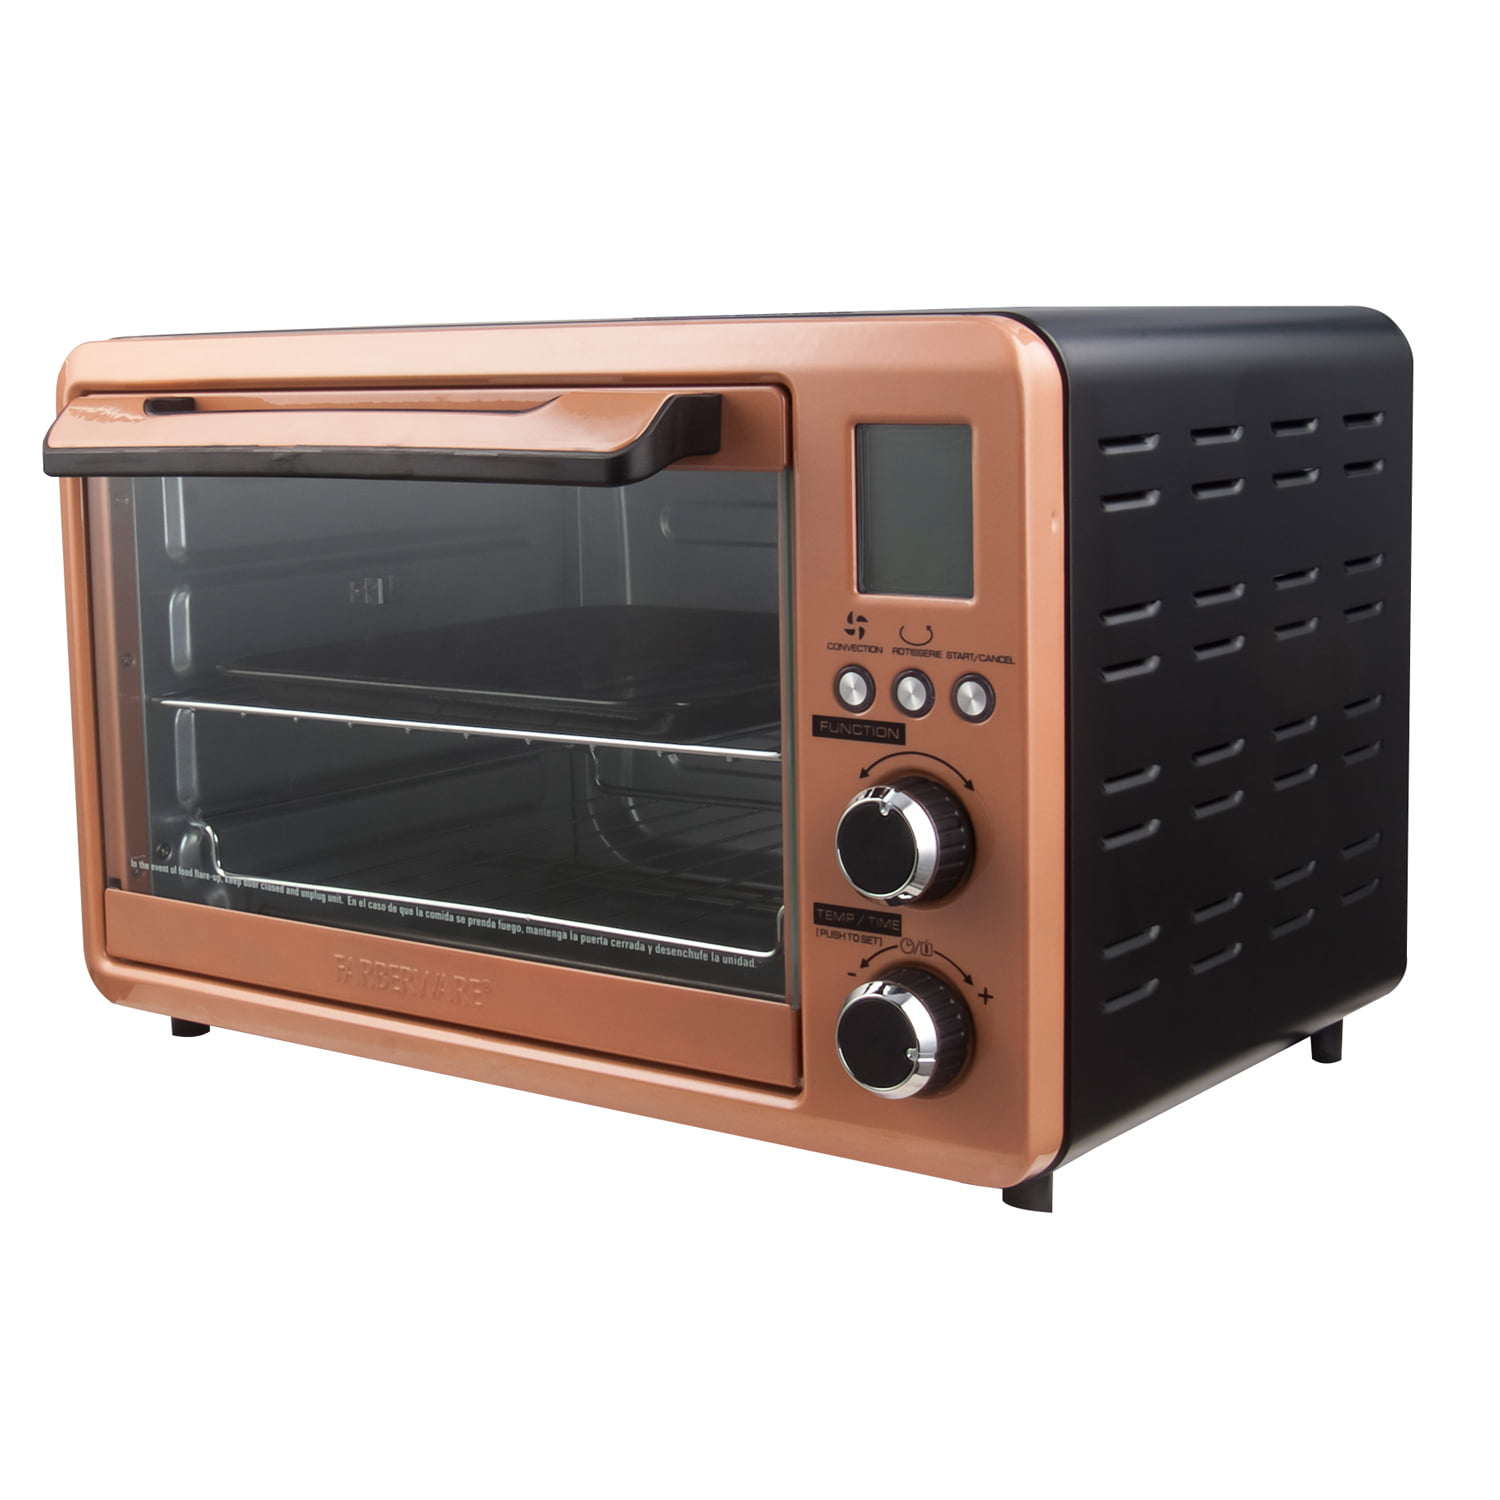 Farberware Digital 6 Slice Toaster Oven Sunset Copper Walmart